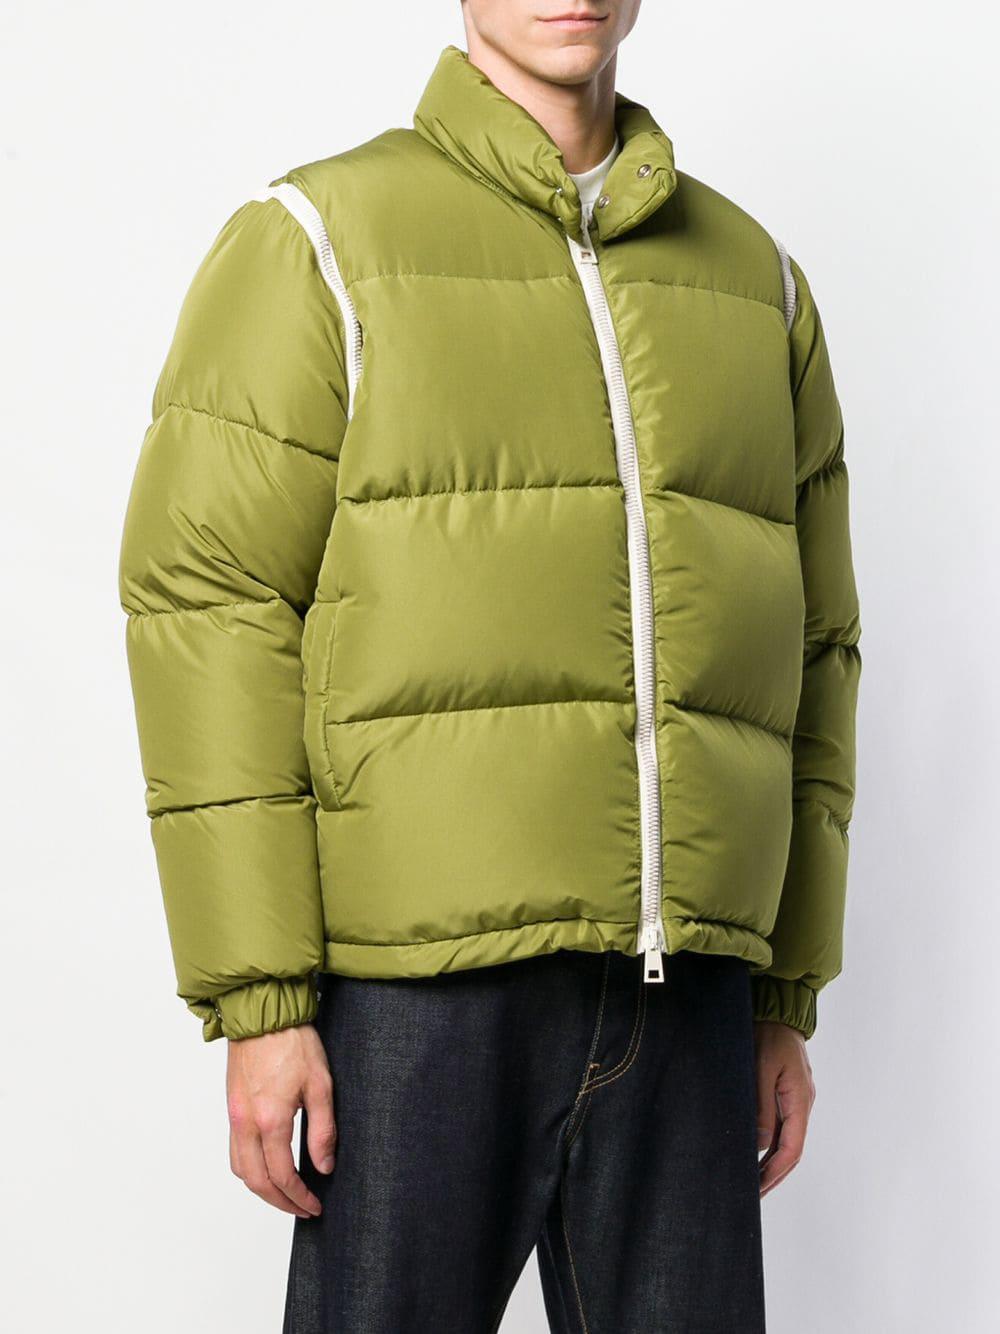 Sunnei Zipped Puffer Jacket in Green for Men - Lyst